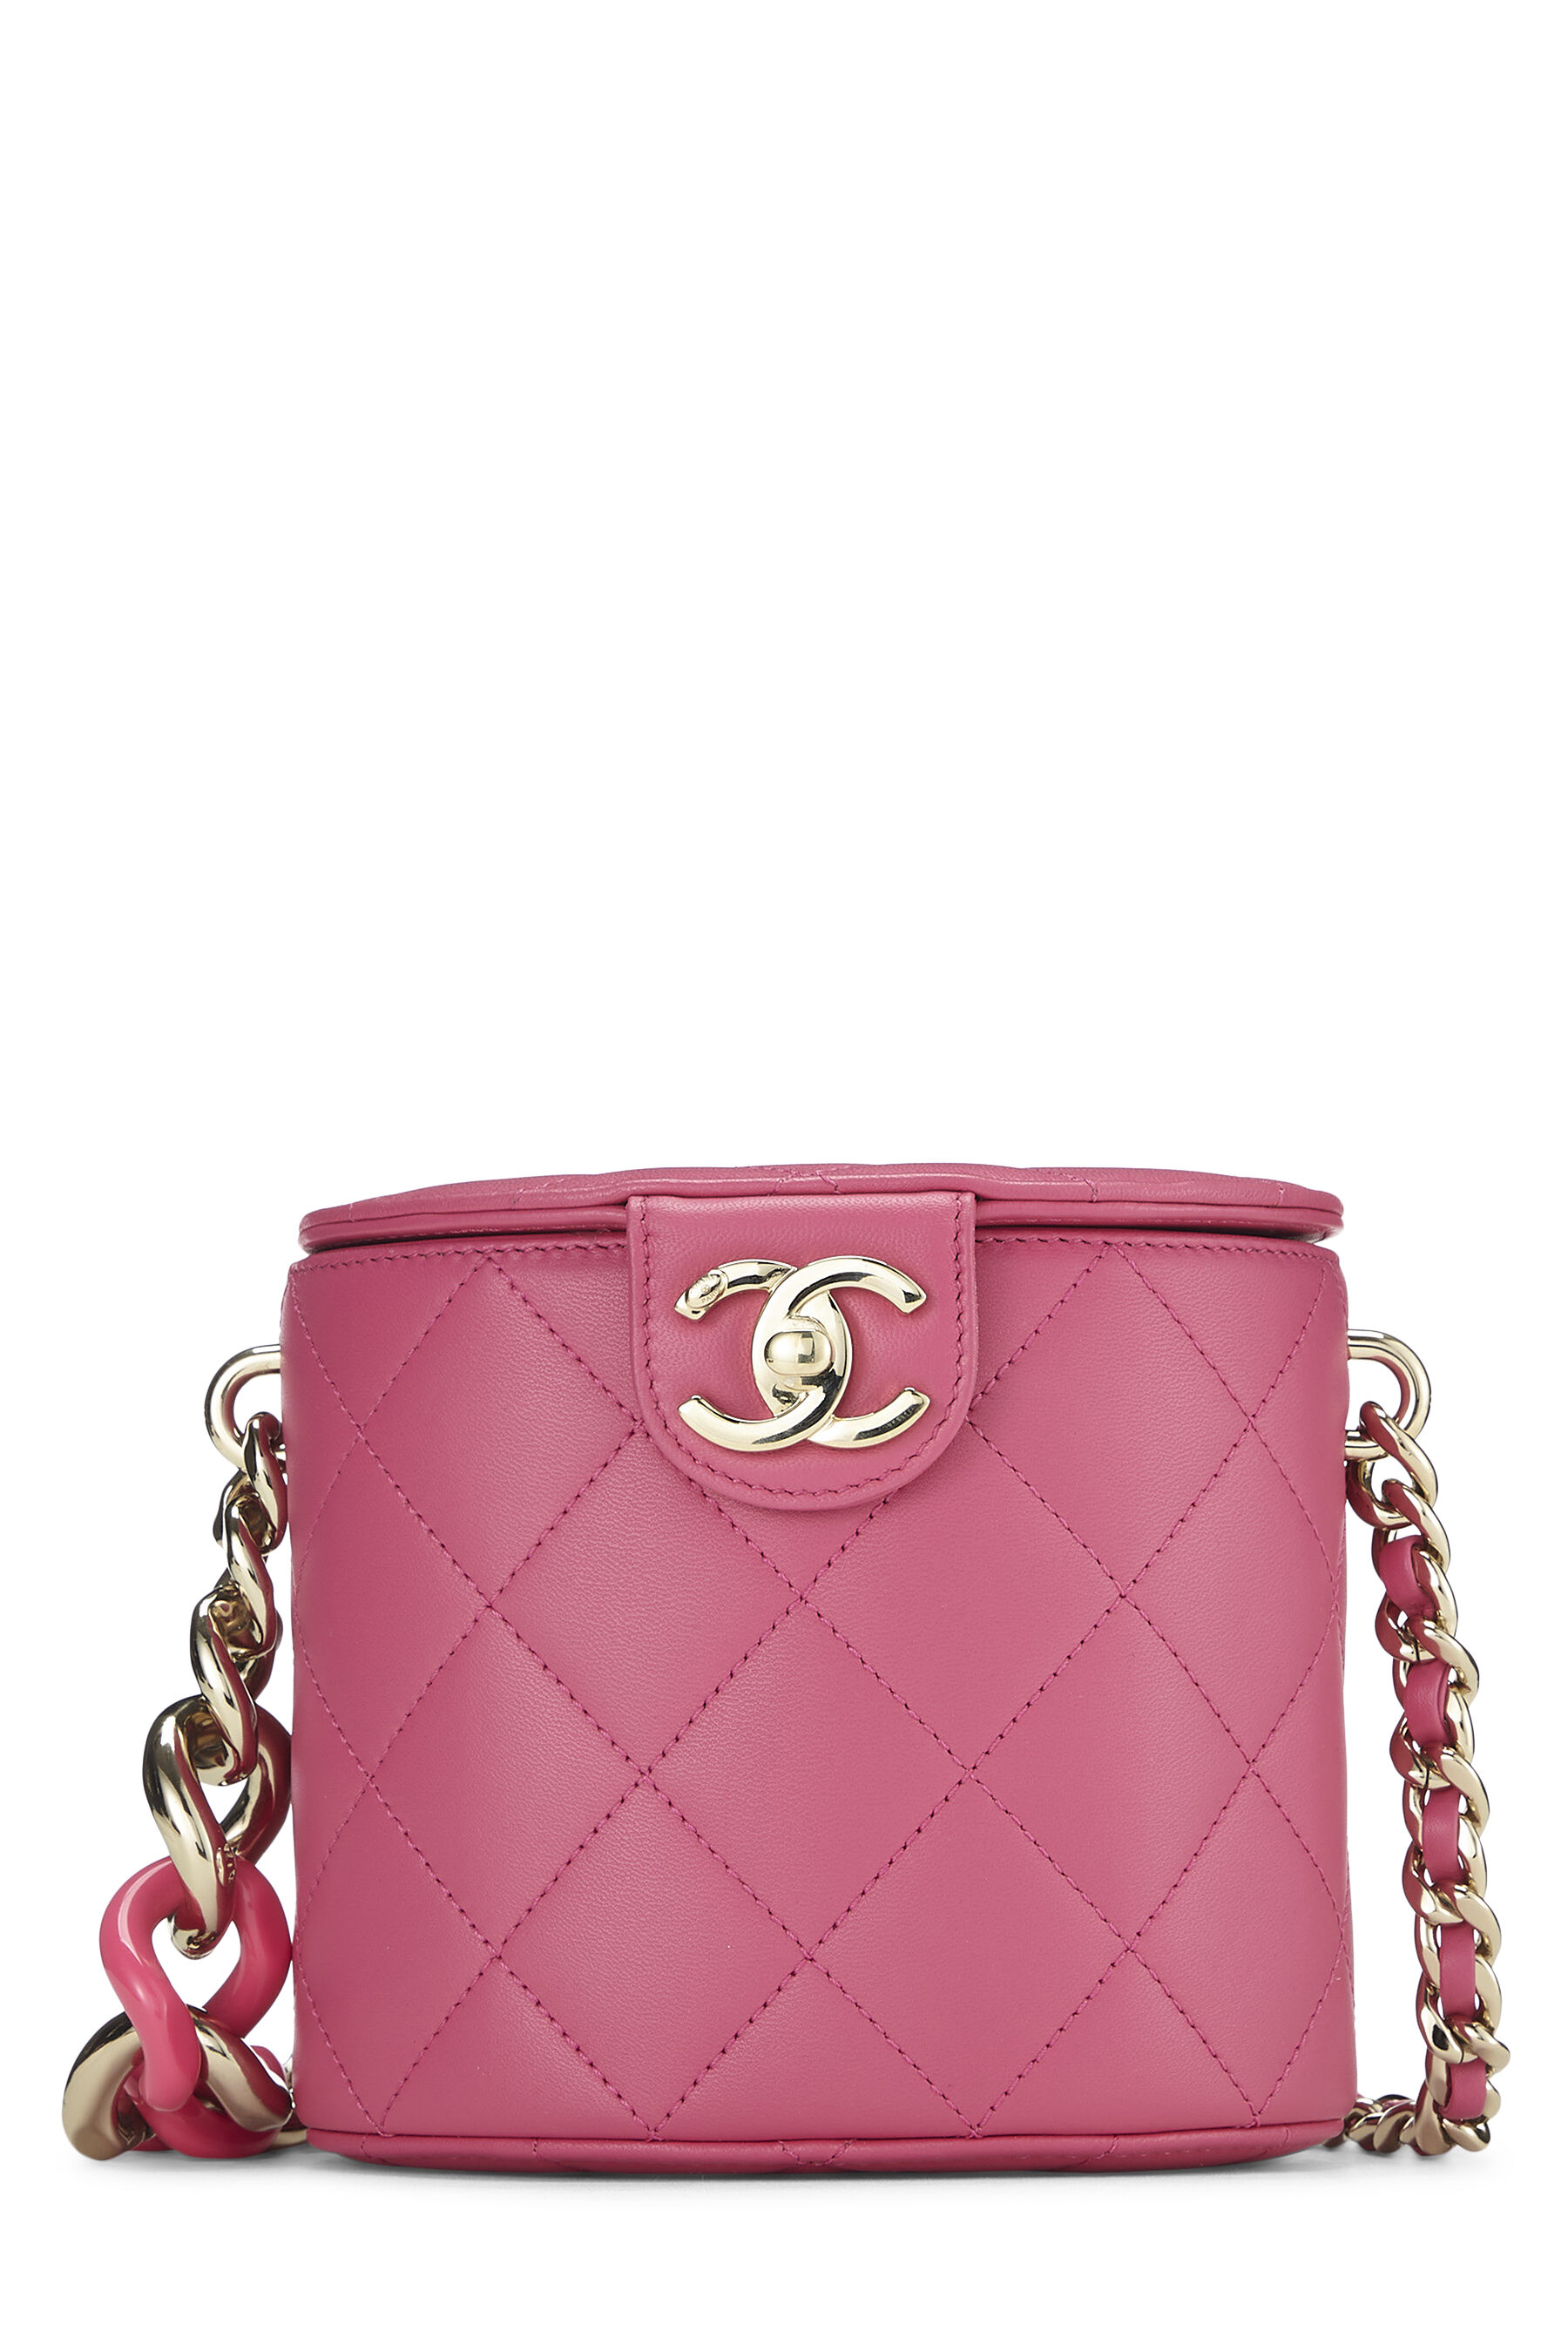 Chanel Pink Quilted Lambskin Elegant Chain Belt Bag